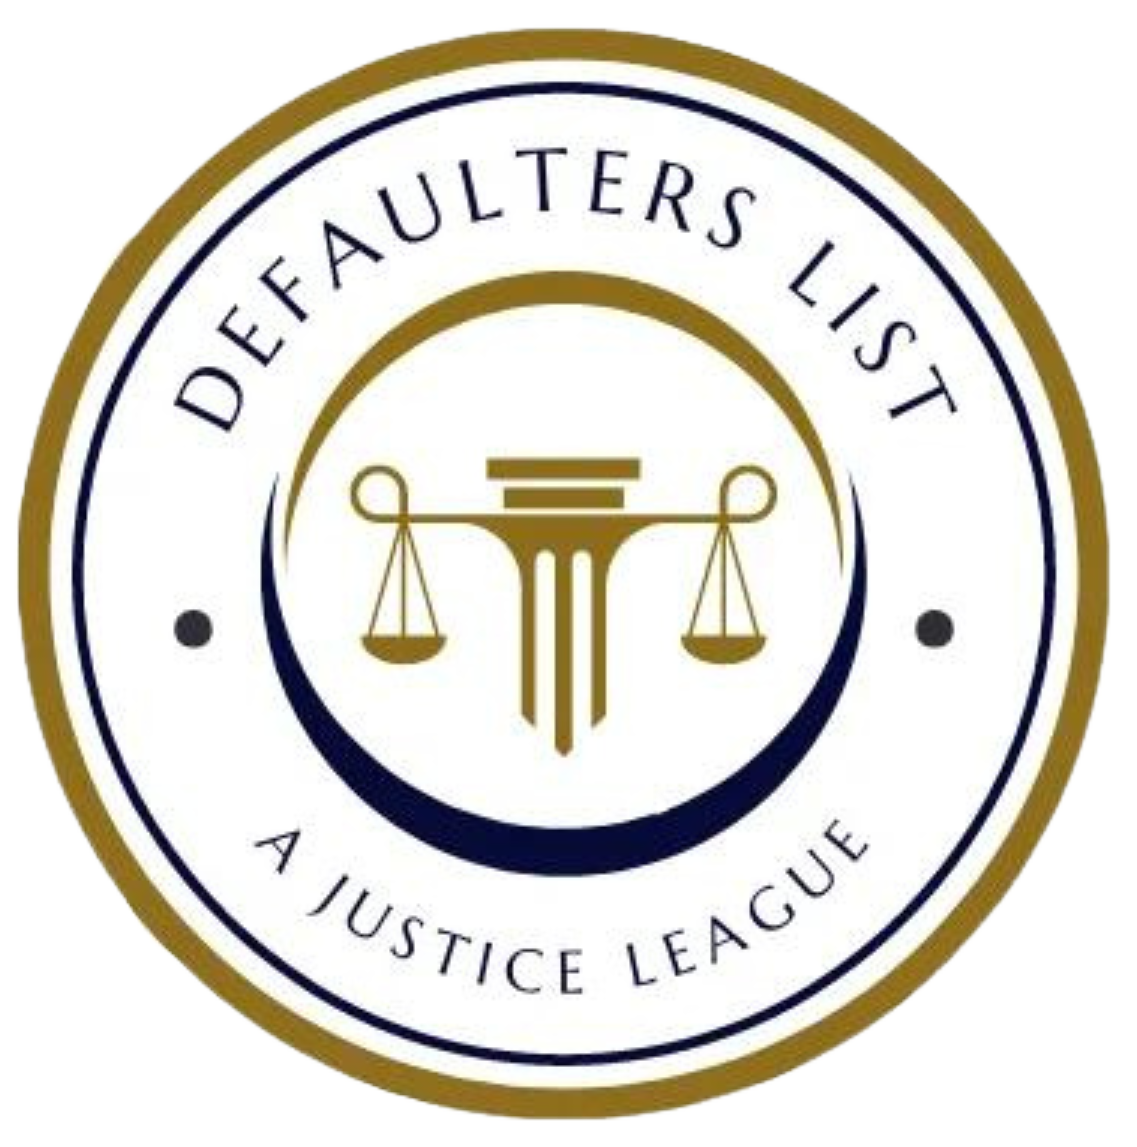 defaulter's list